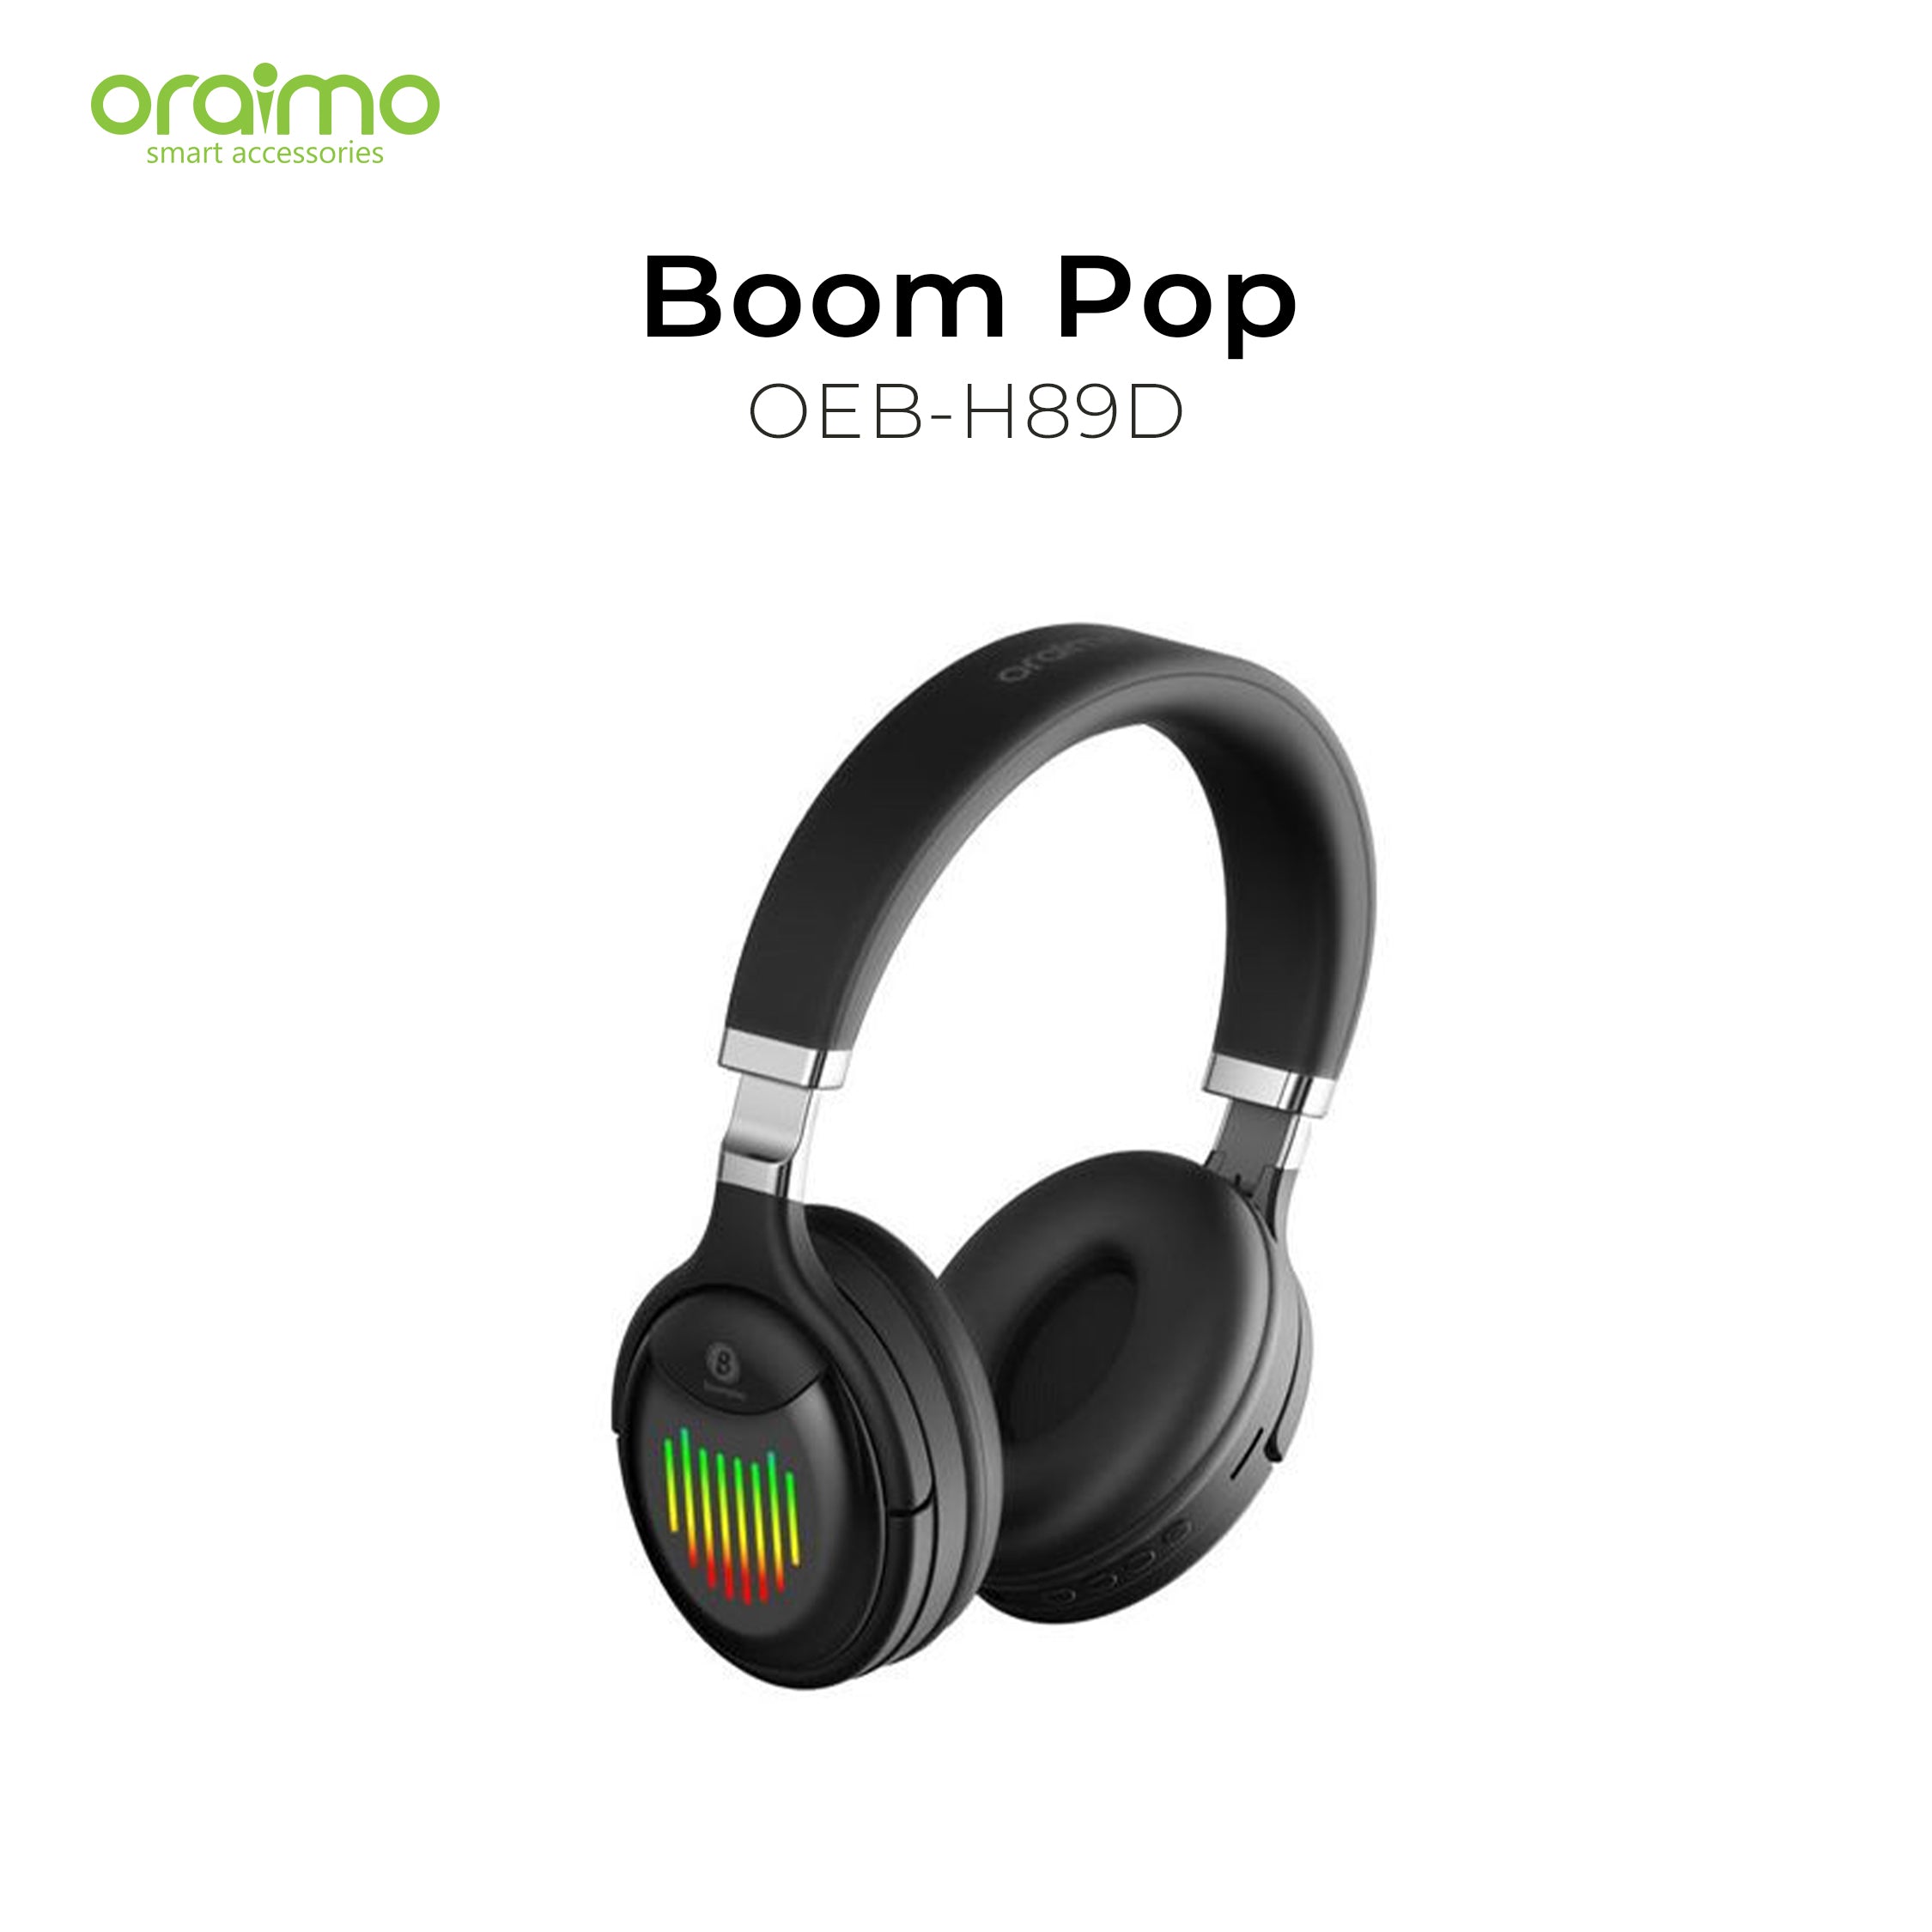 Oraimo Boom Pop Headphones OEB-H89D